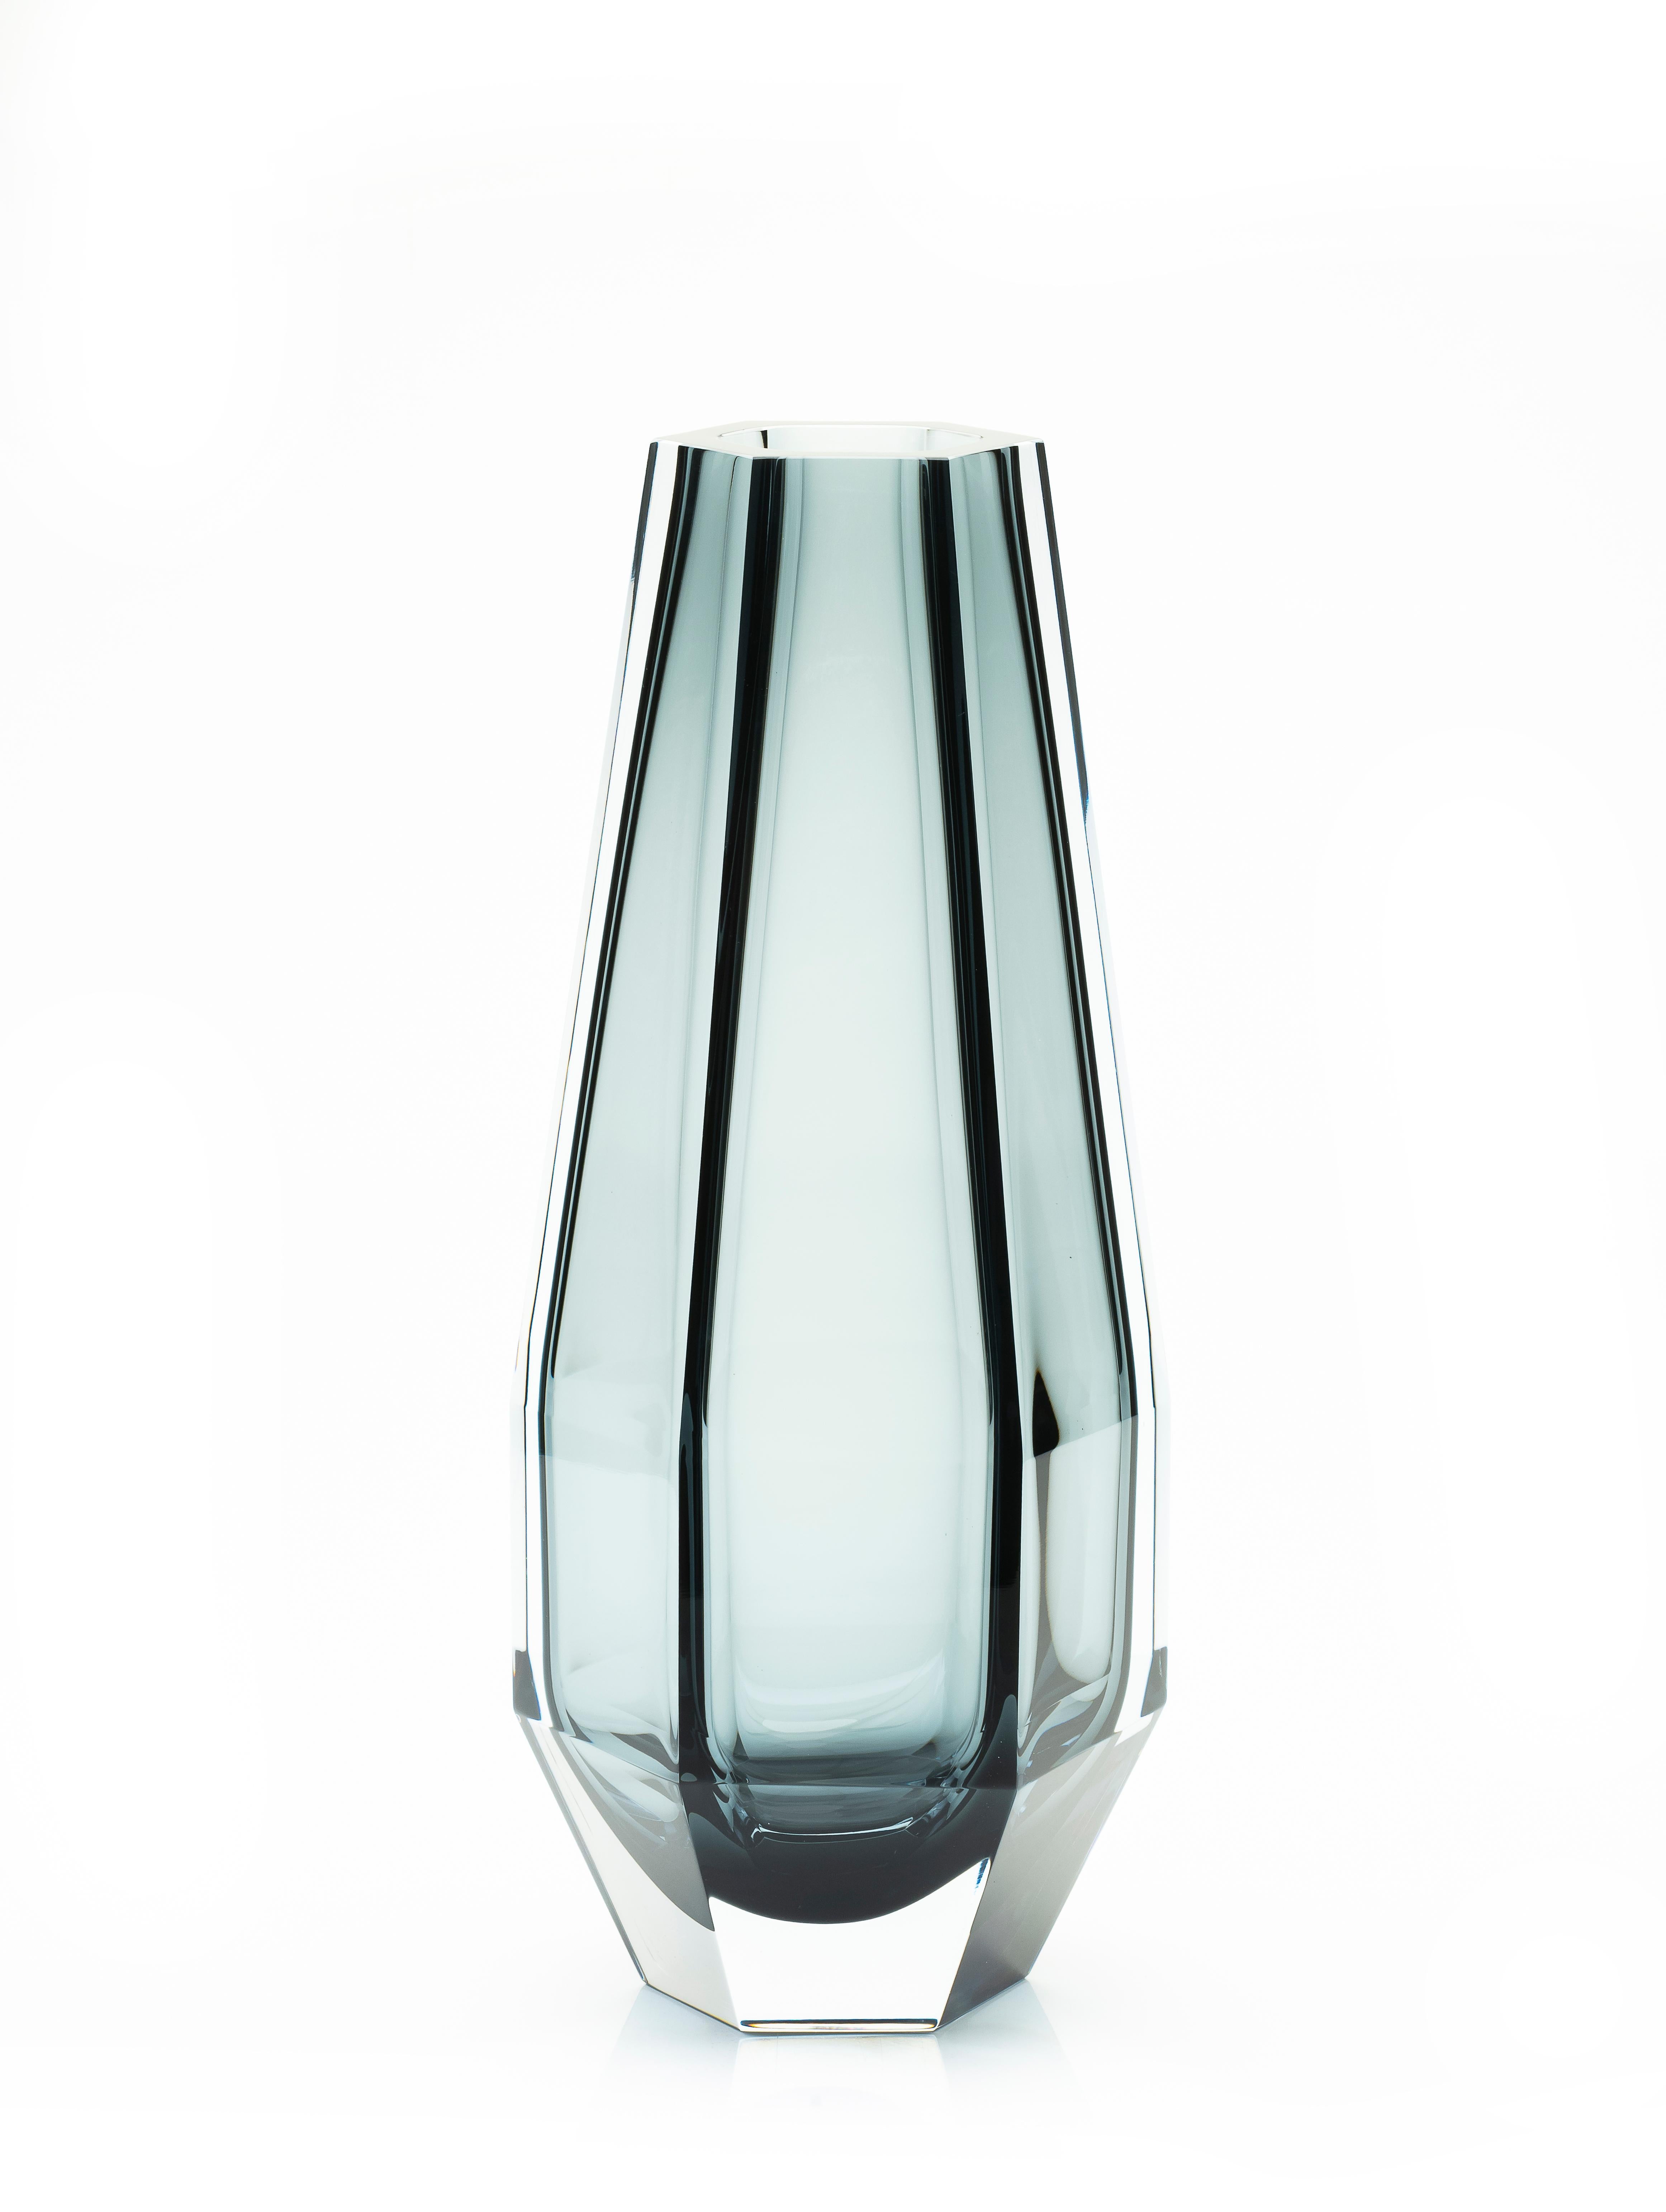 italien Vase en verre transparent de Murano Alessandro Mendini du 21e siècle Bleu océan en vente